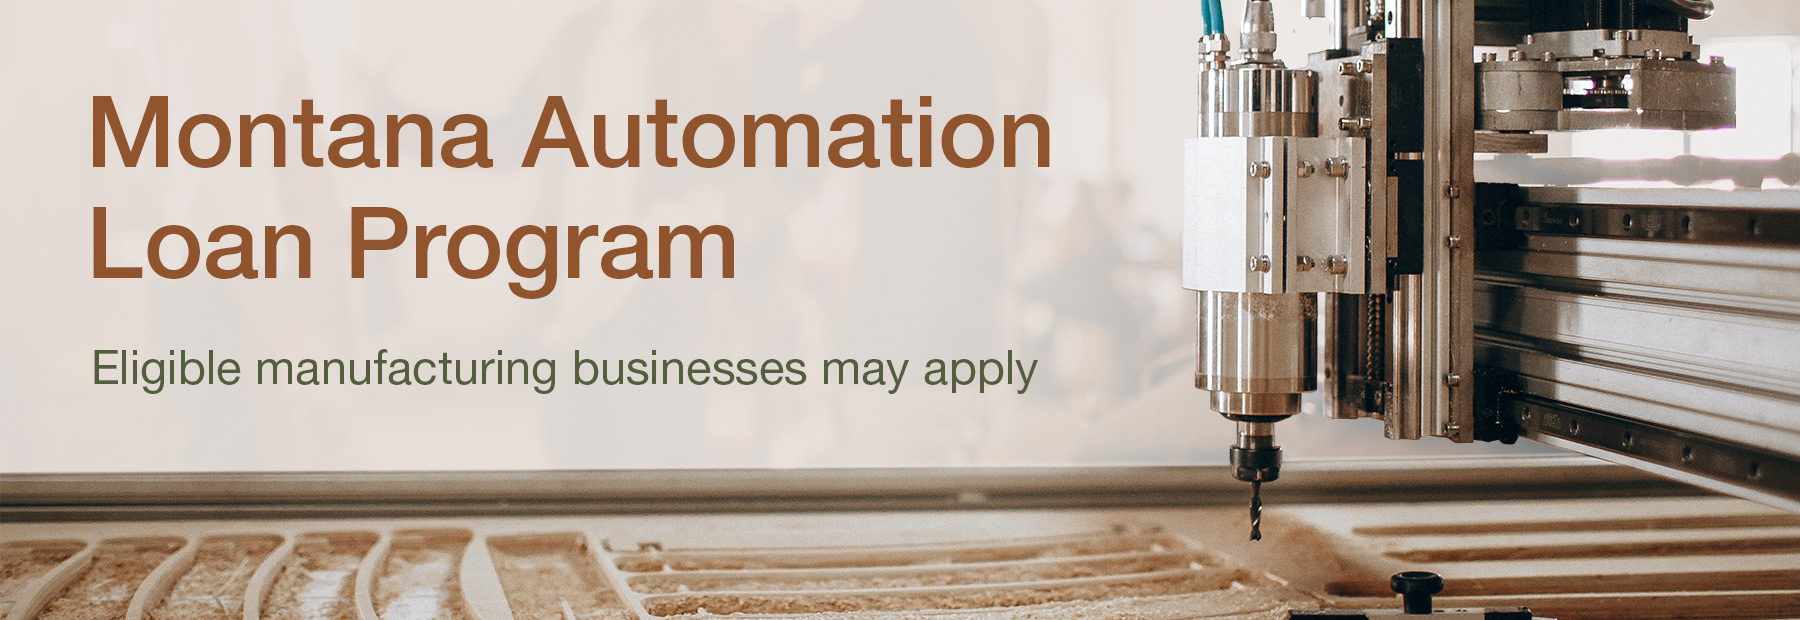 Automated Mill, Montana Automation Loan Program